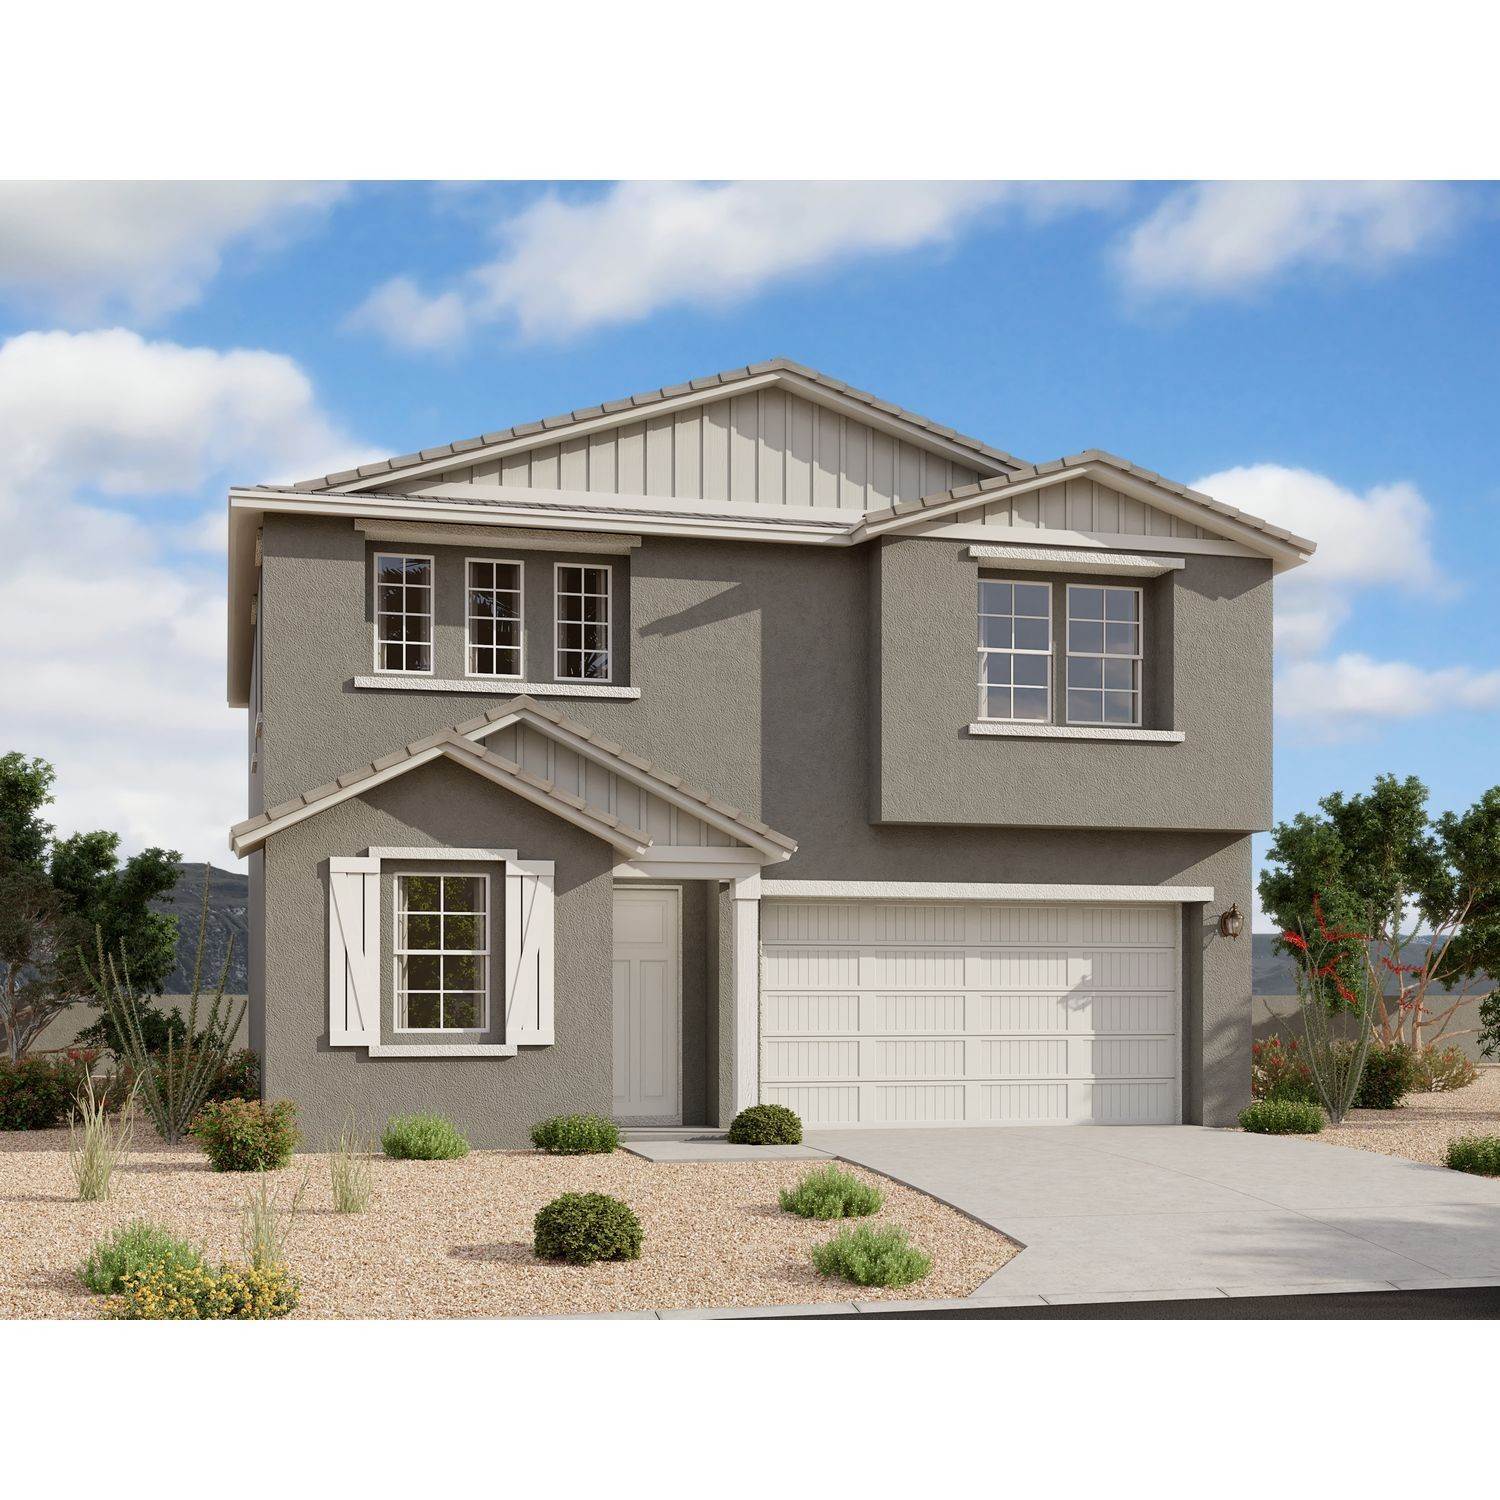 7. Single Family for Sale at Eastmark 9619 E Solina Ave, Mesa, AZ 85212